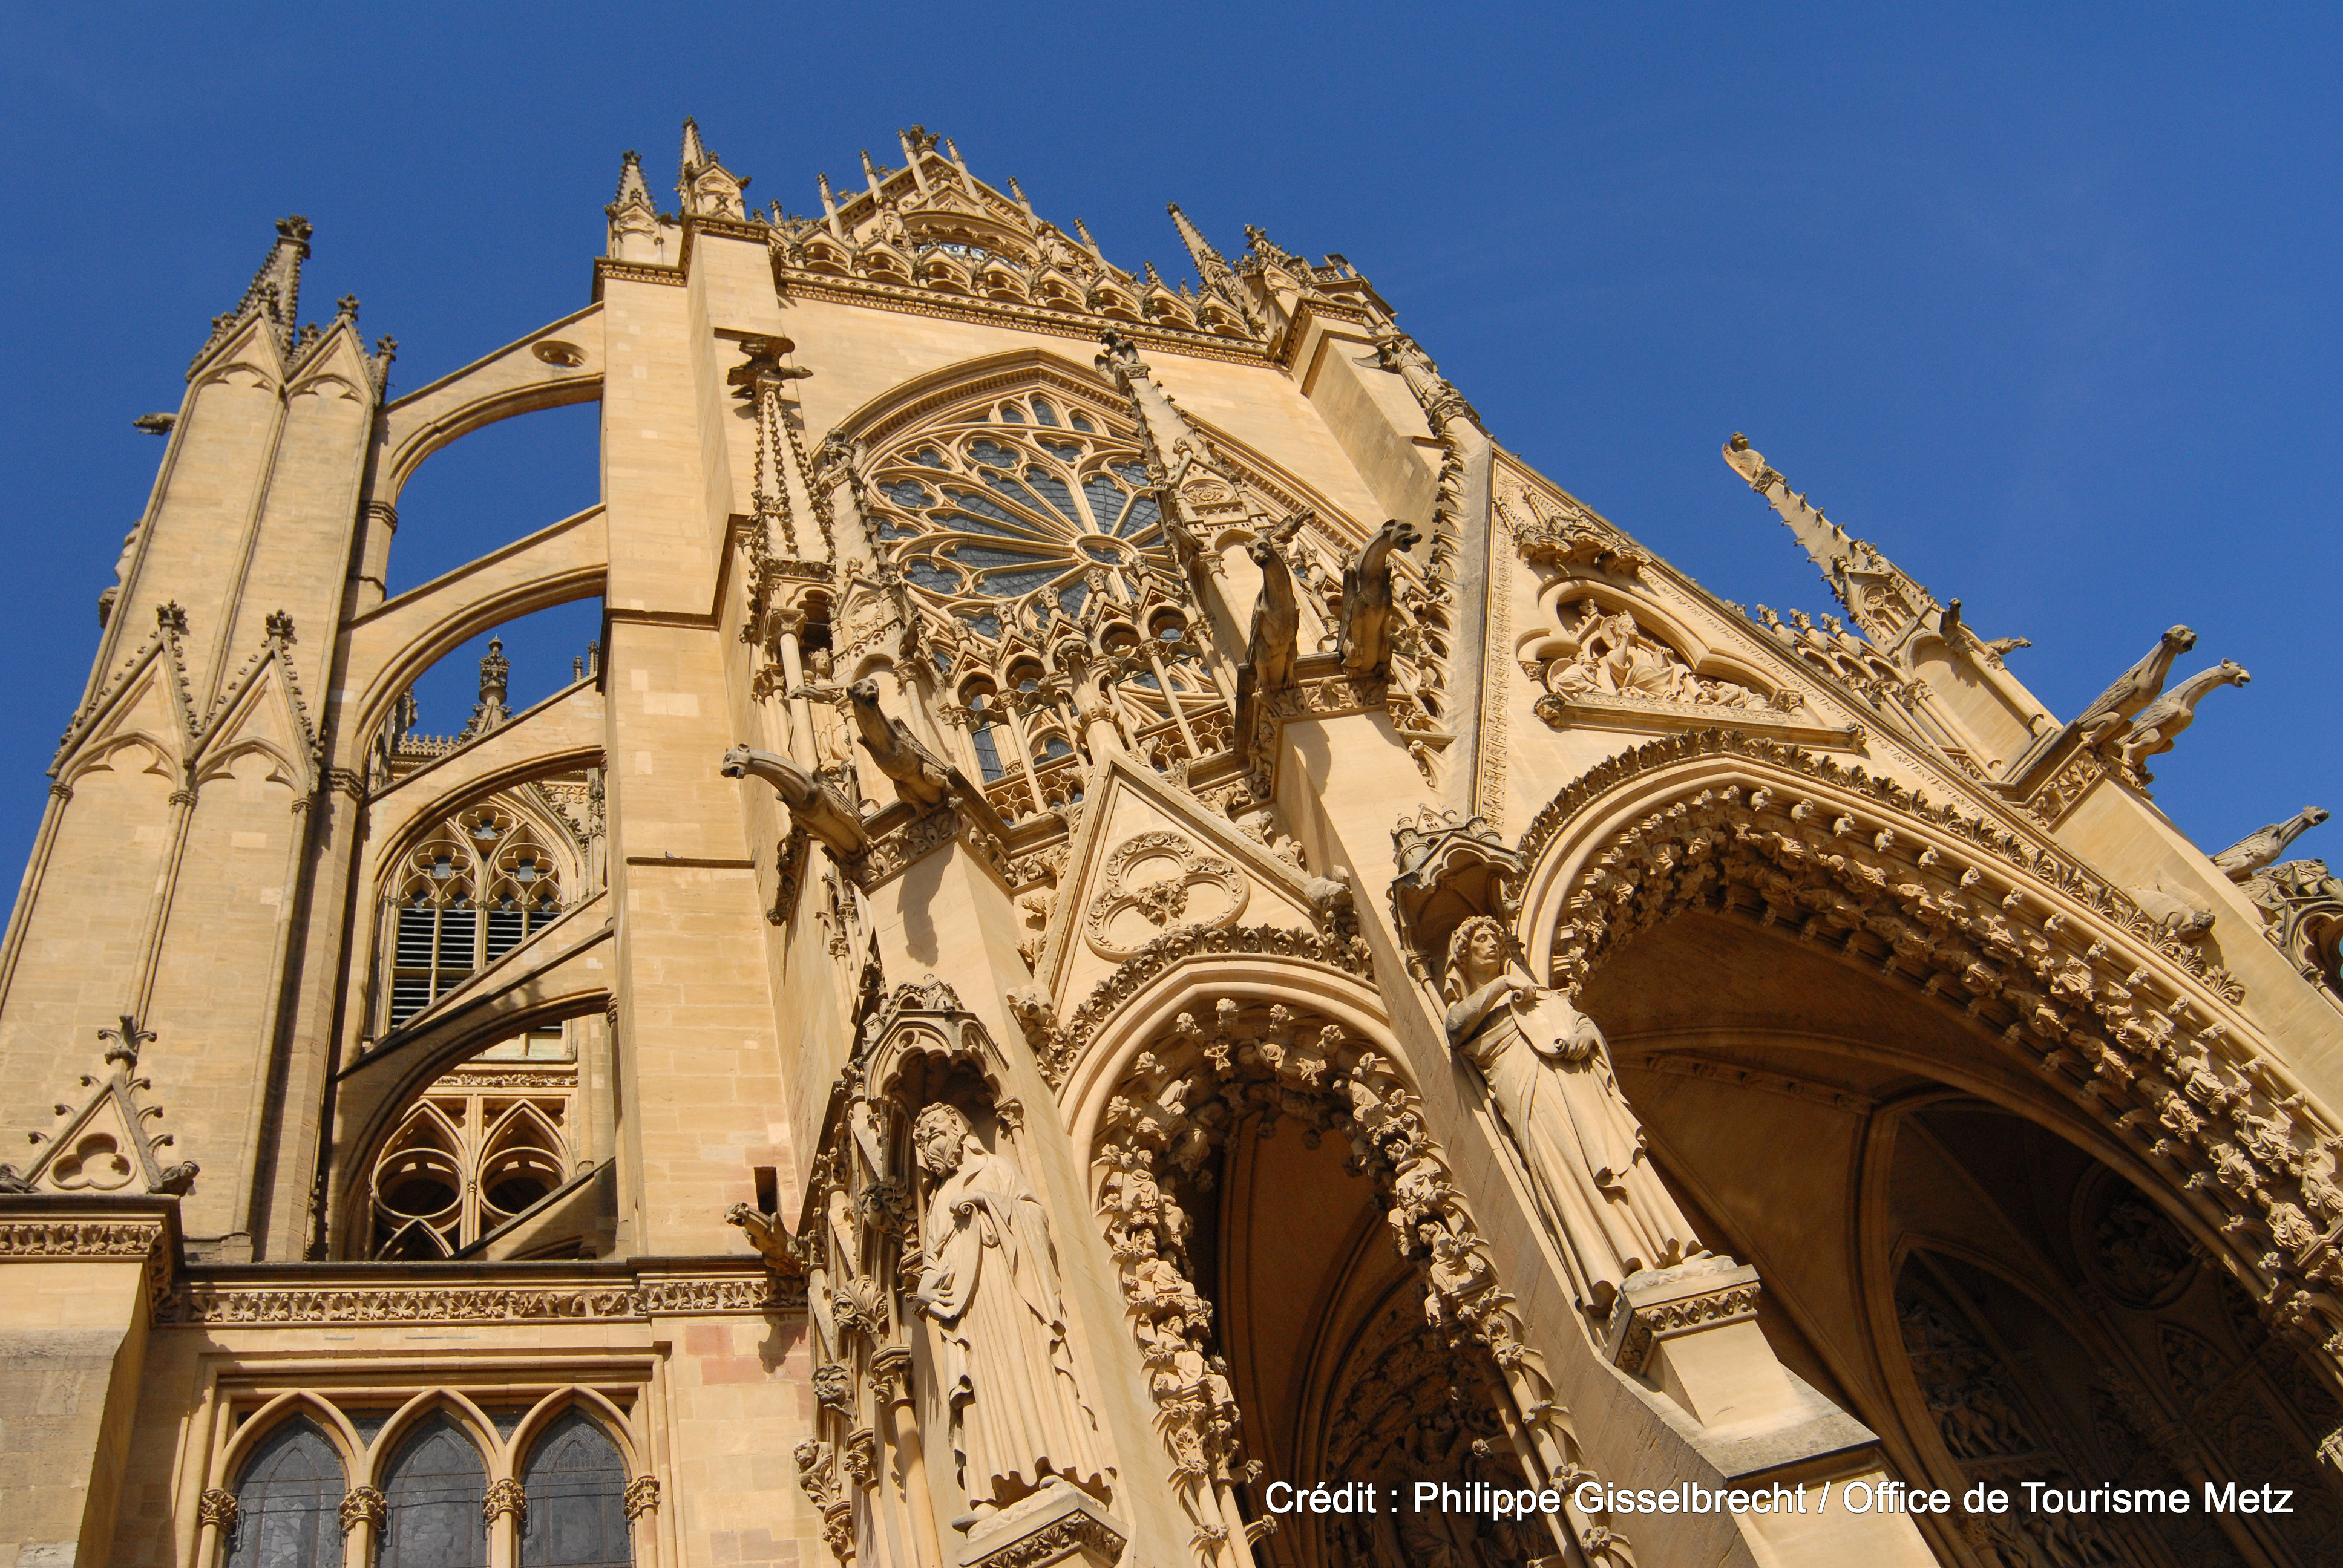 Saint Nicholas, patron saint of Lorraine - Guided tour of Metz